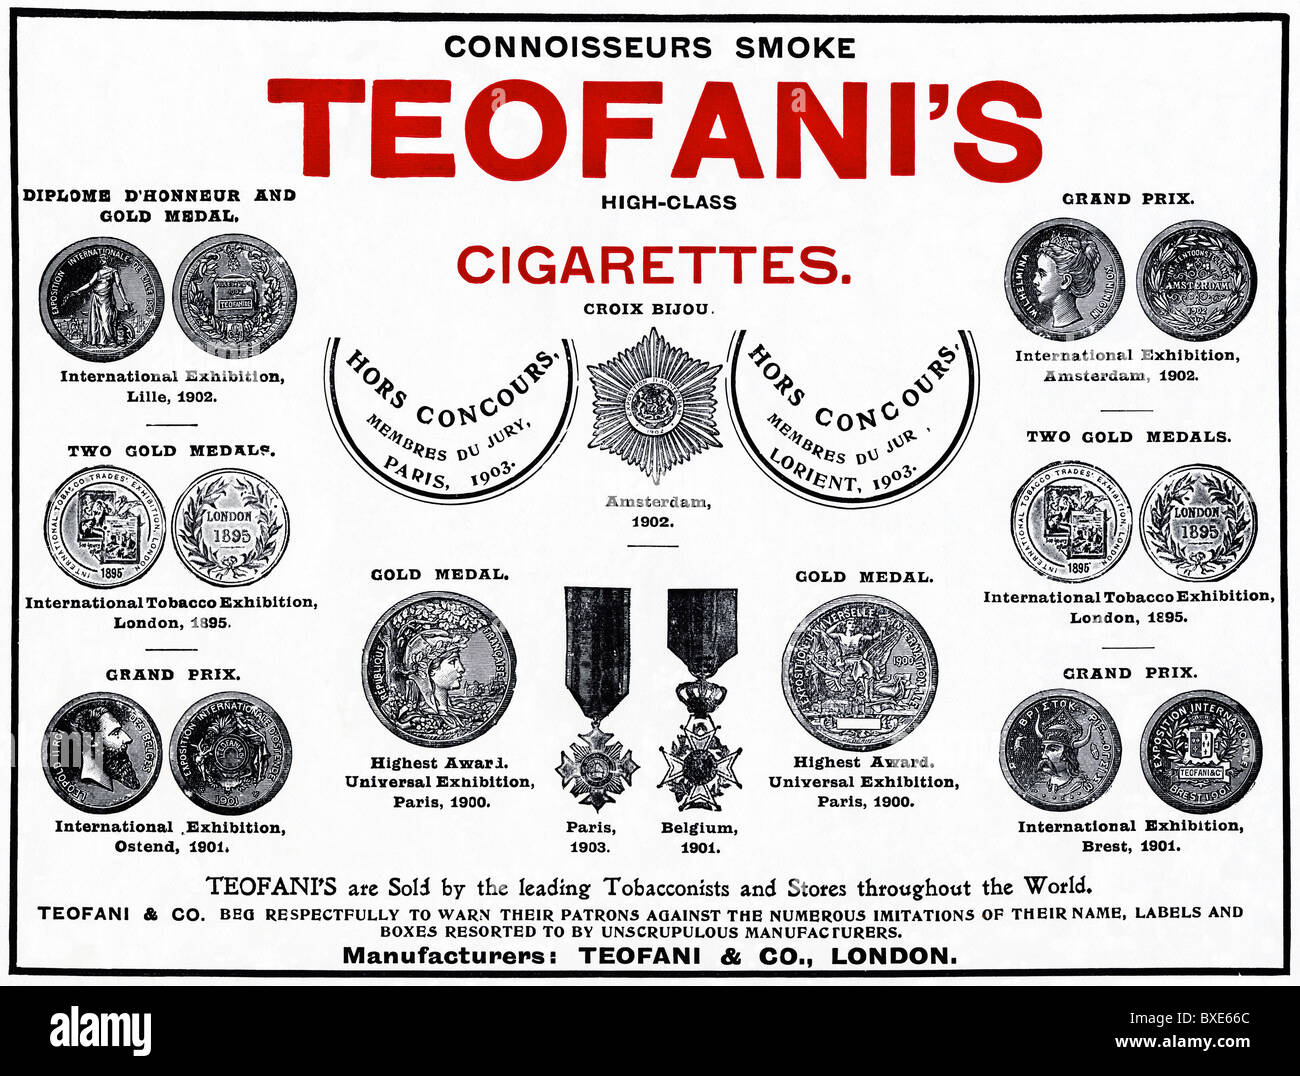 Edwardian Anzeige für preisgekrönte Teofanis Zigaretten ca. 1903 Stockfoto